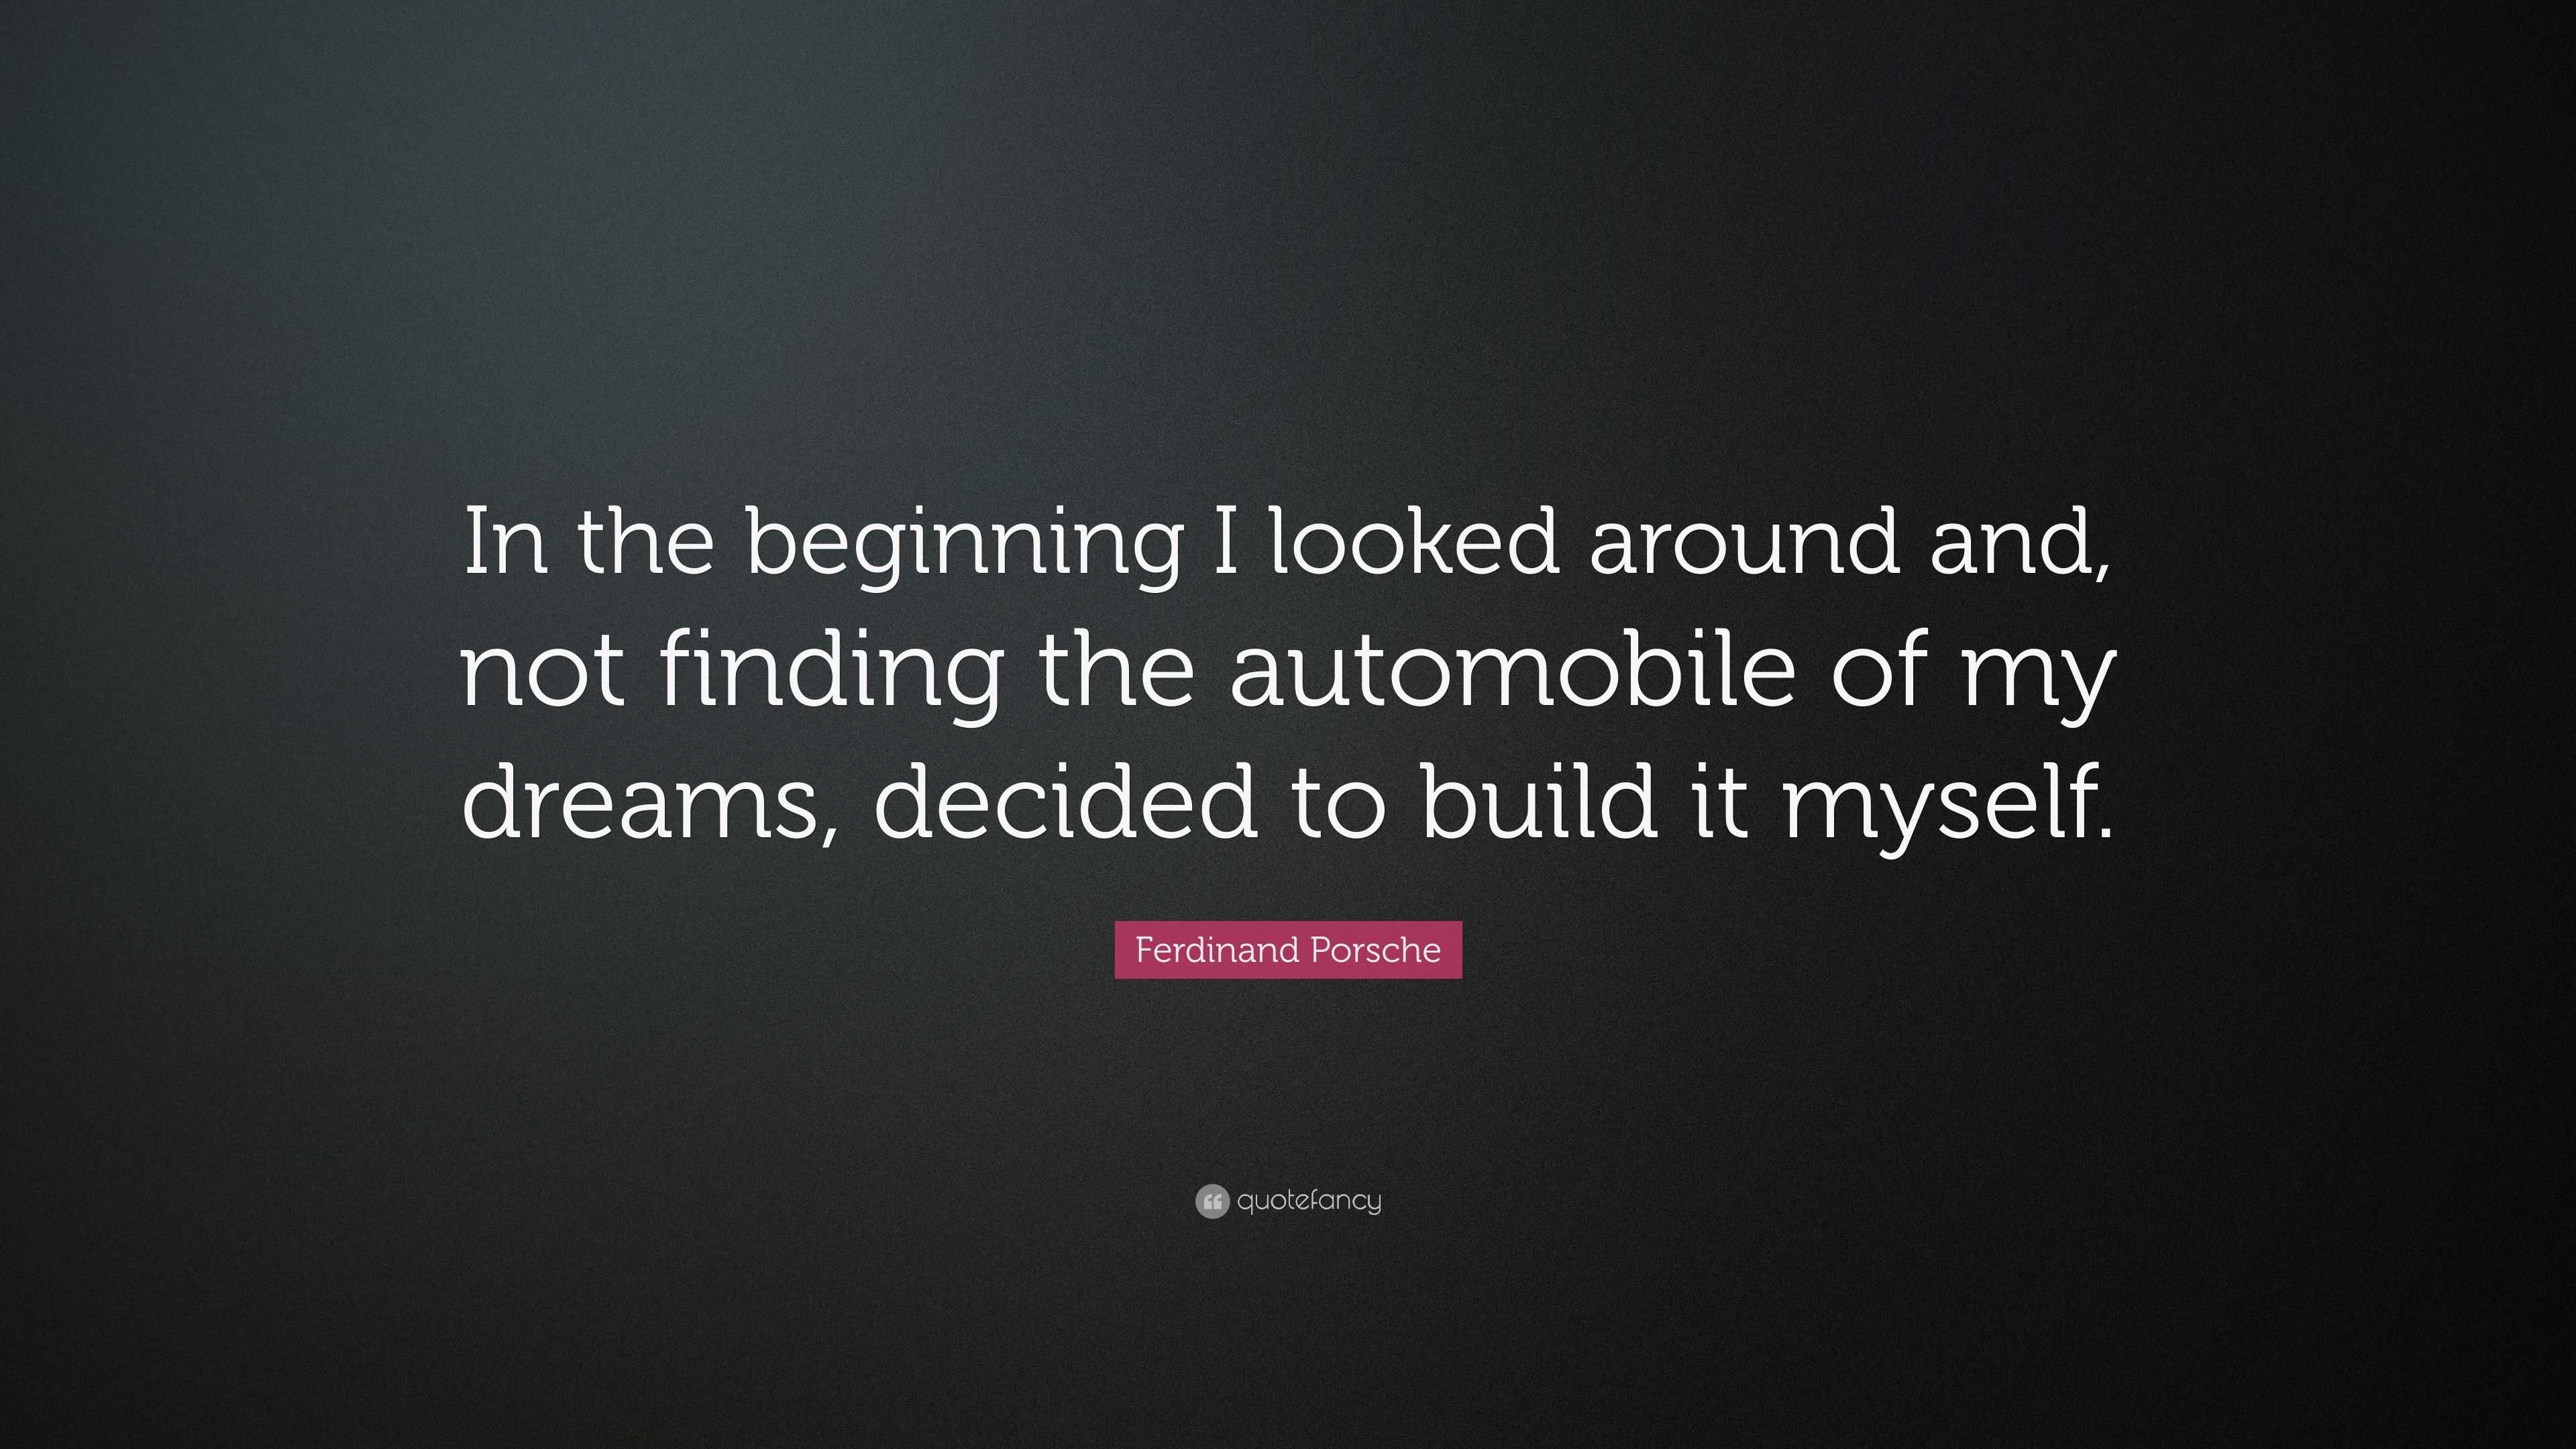 Ferdinand Porsche Quote: “In the beginning I looked around and, not